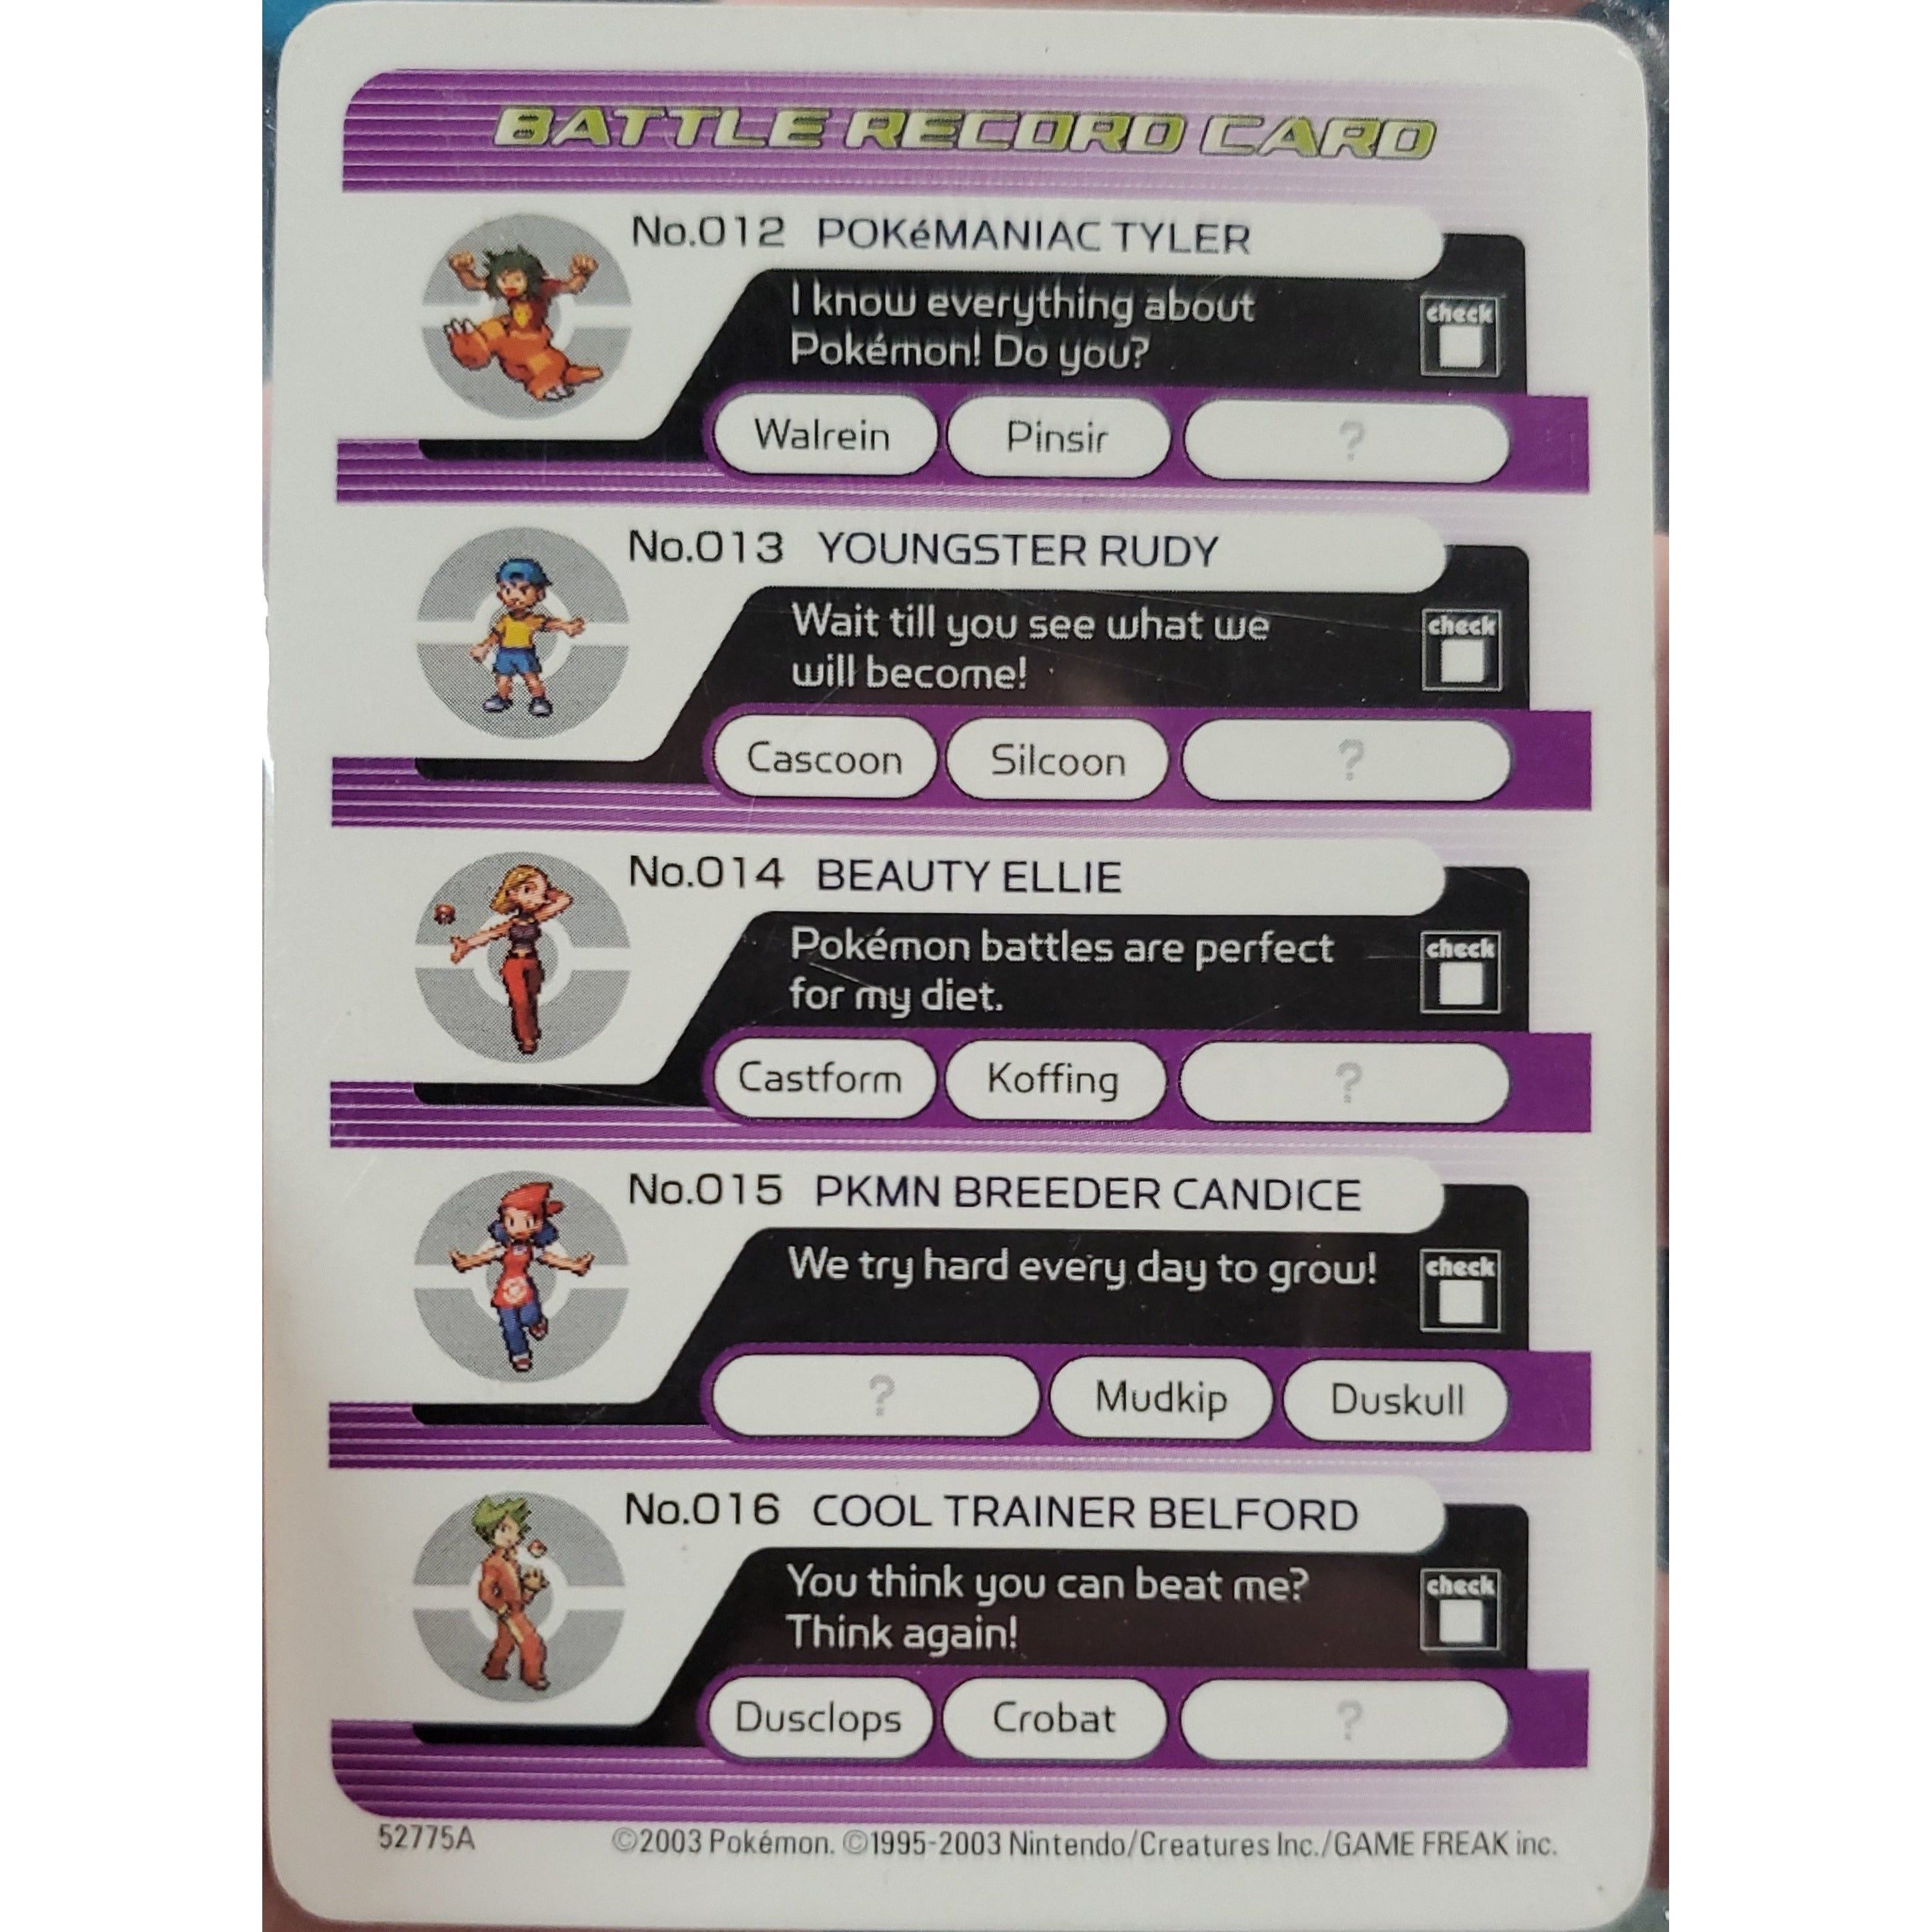 GBA - Pokemon Battle Card - Seizing Poison Battle Record Cart